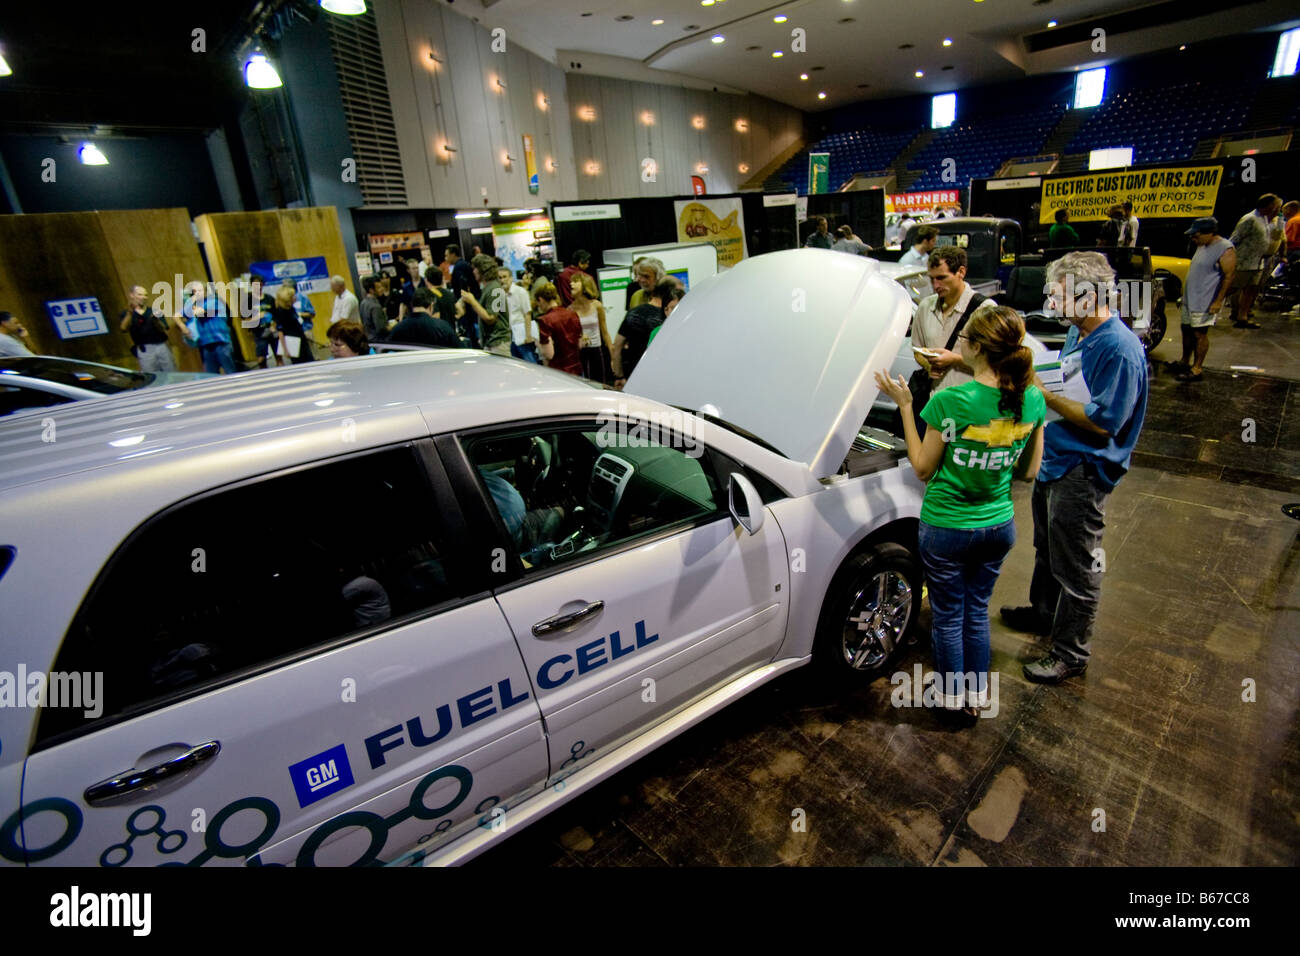 Chevrolet fuel cell car on exhibit at ALTCAR show exhibition in Santa